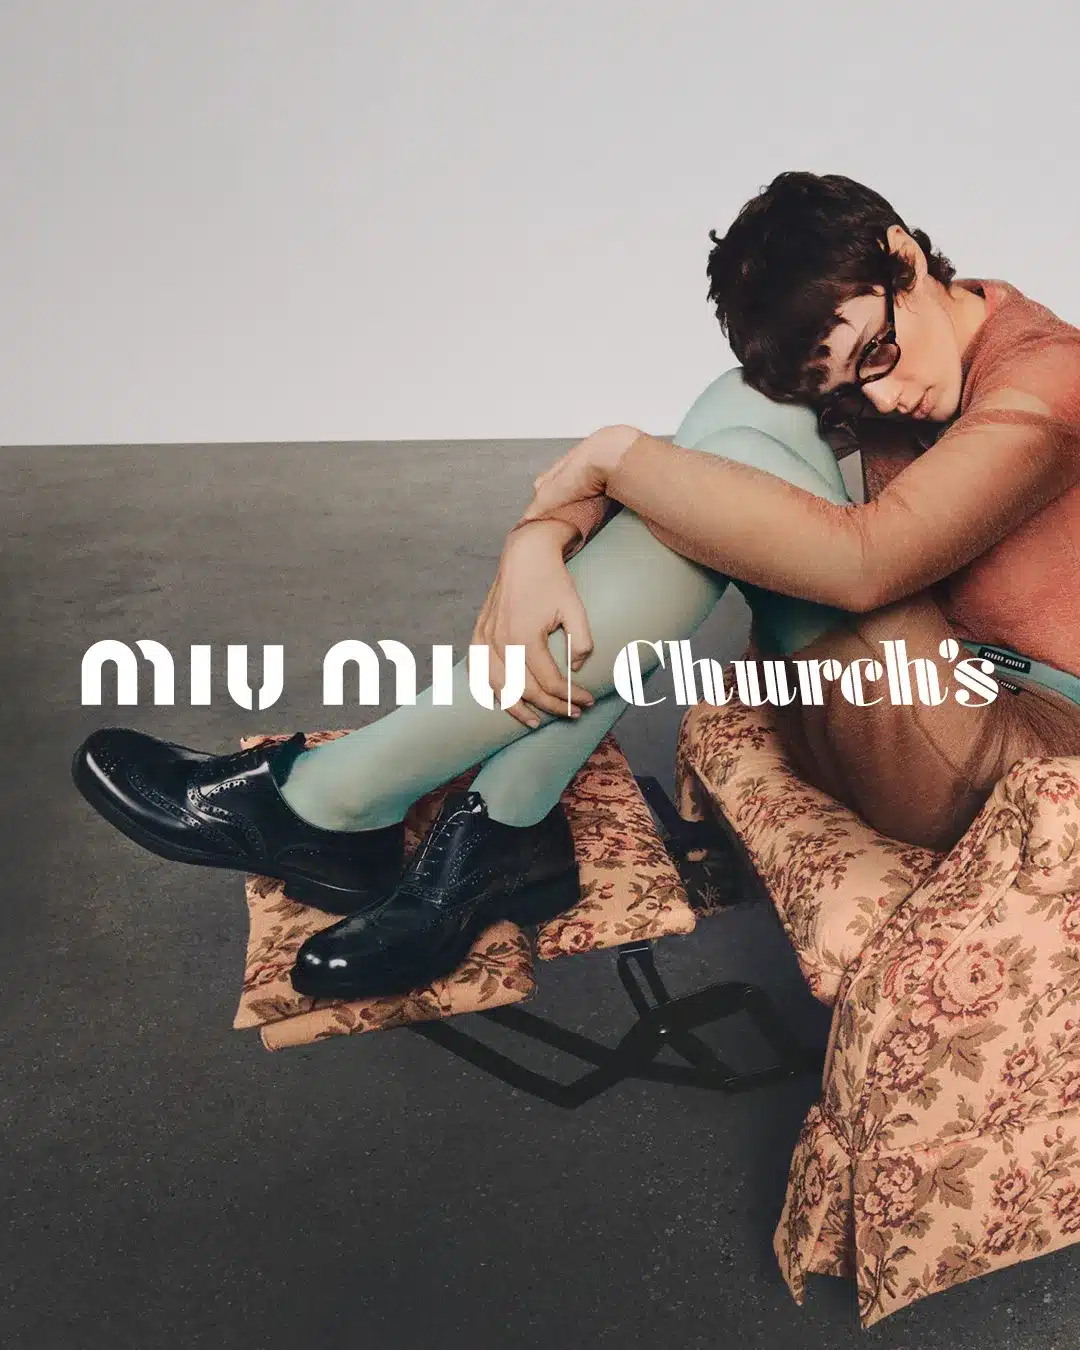 Church's x Miu Miu